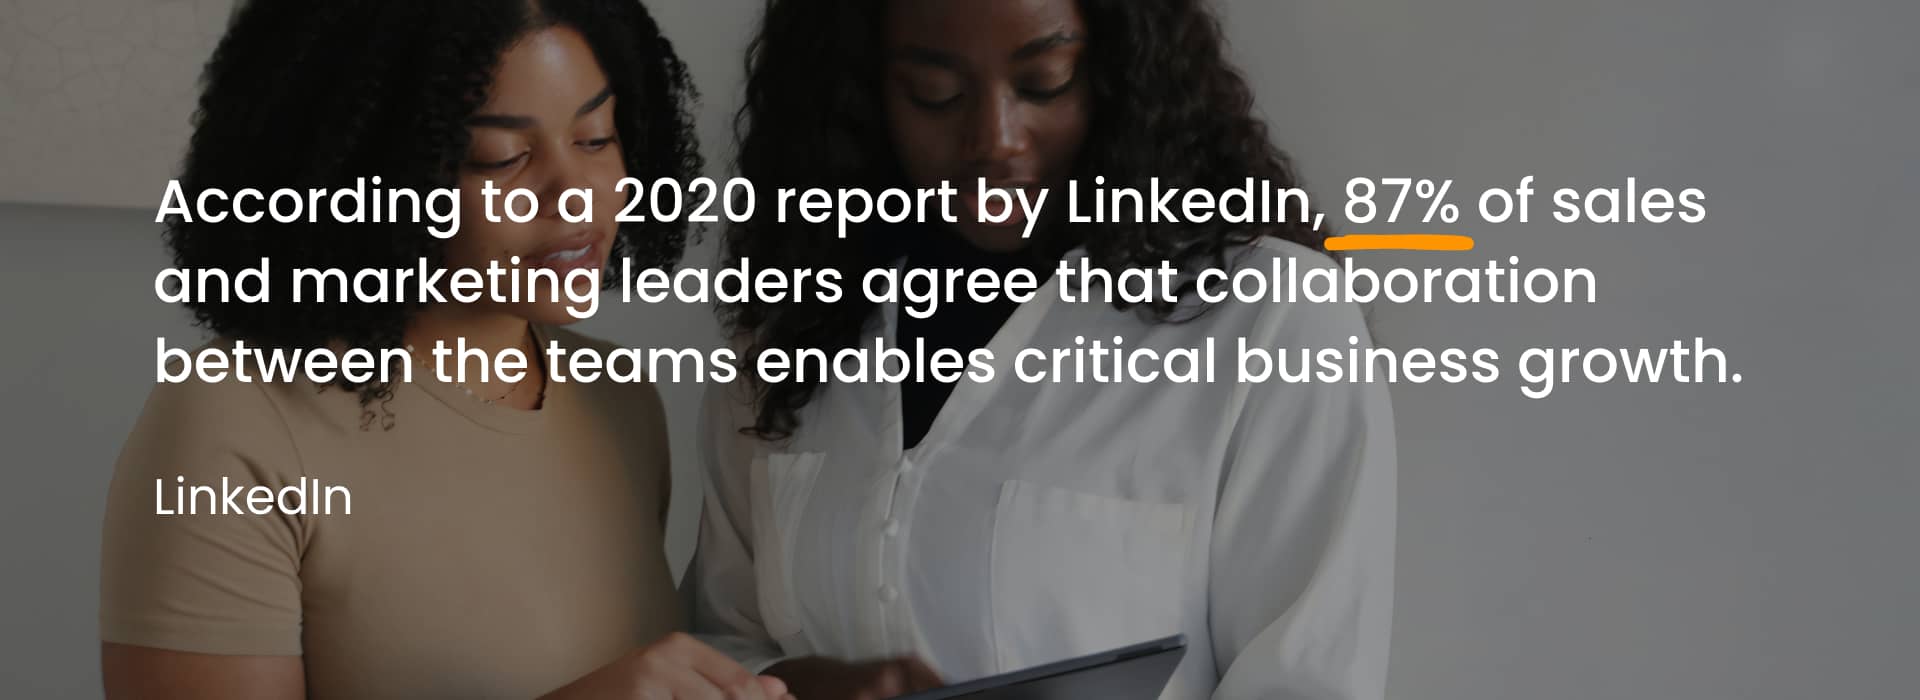 LinkedIn Report 2020